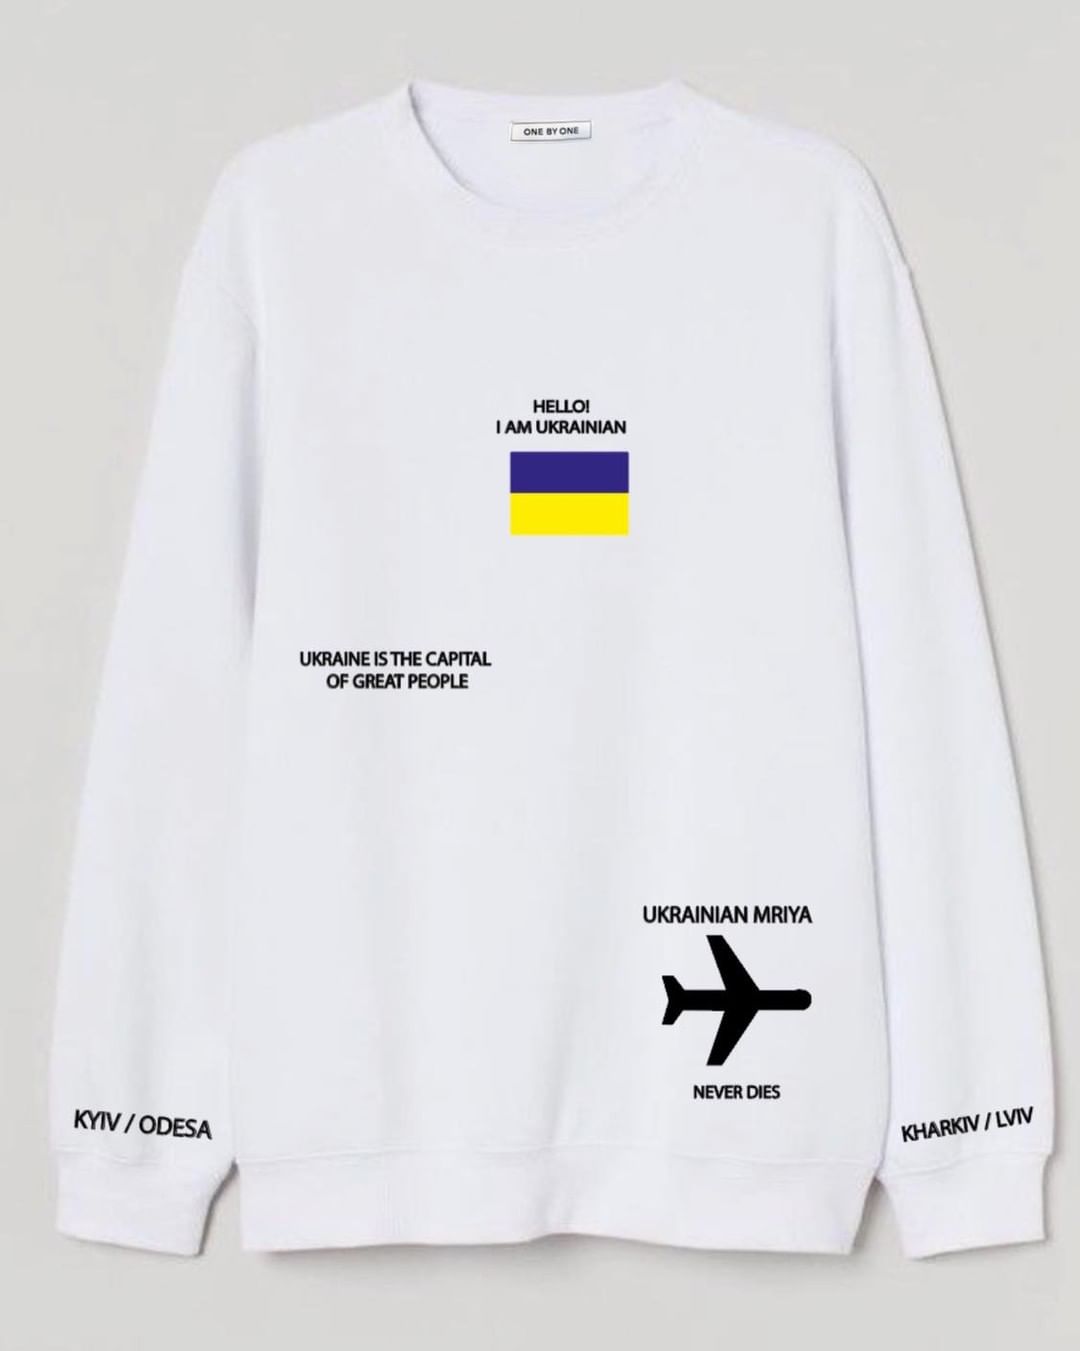 Світшот із колекції UKRAINE IS бренду One by One. Фото: Instagram.com/onebyoneua/